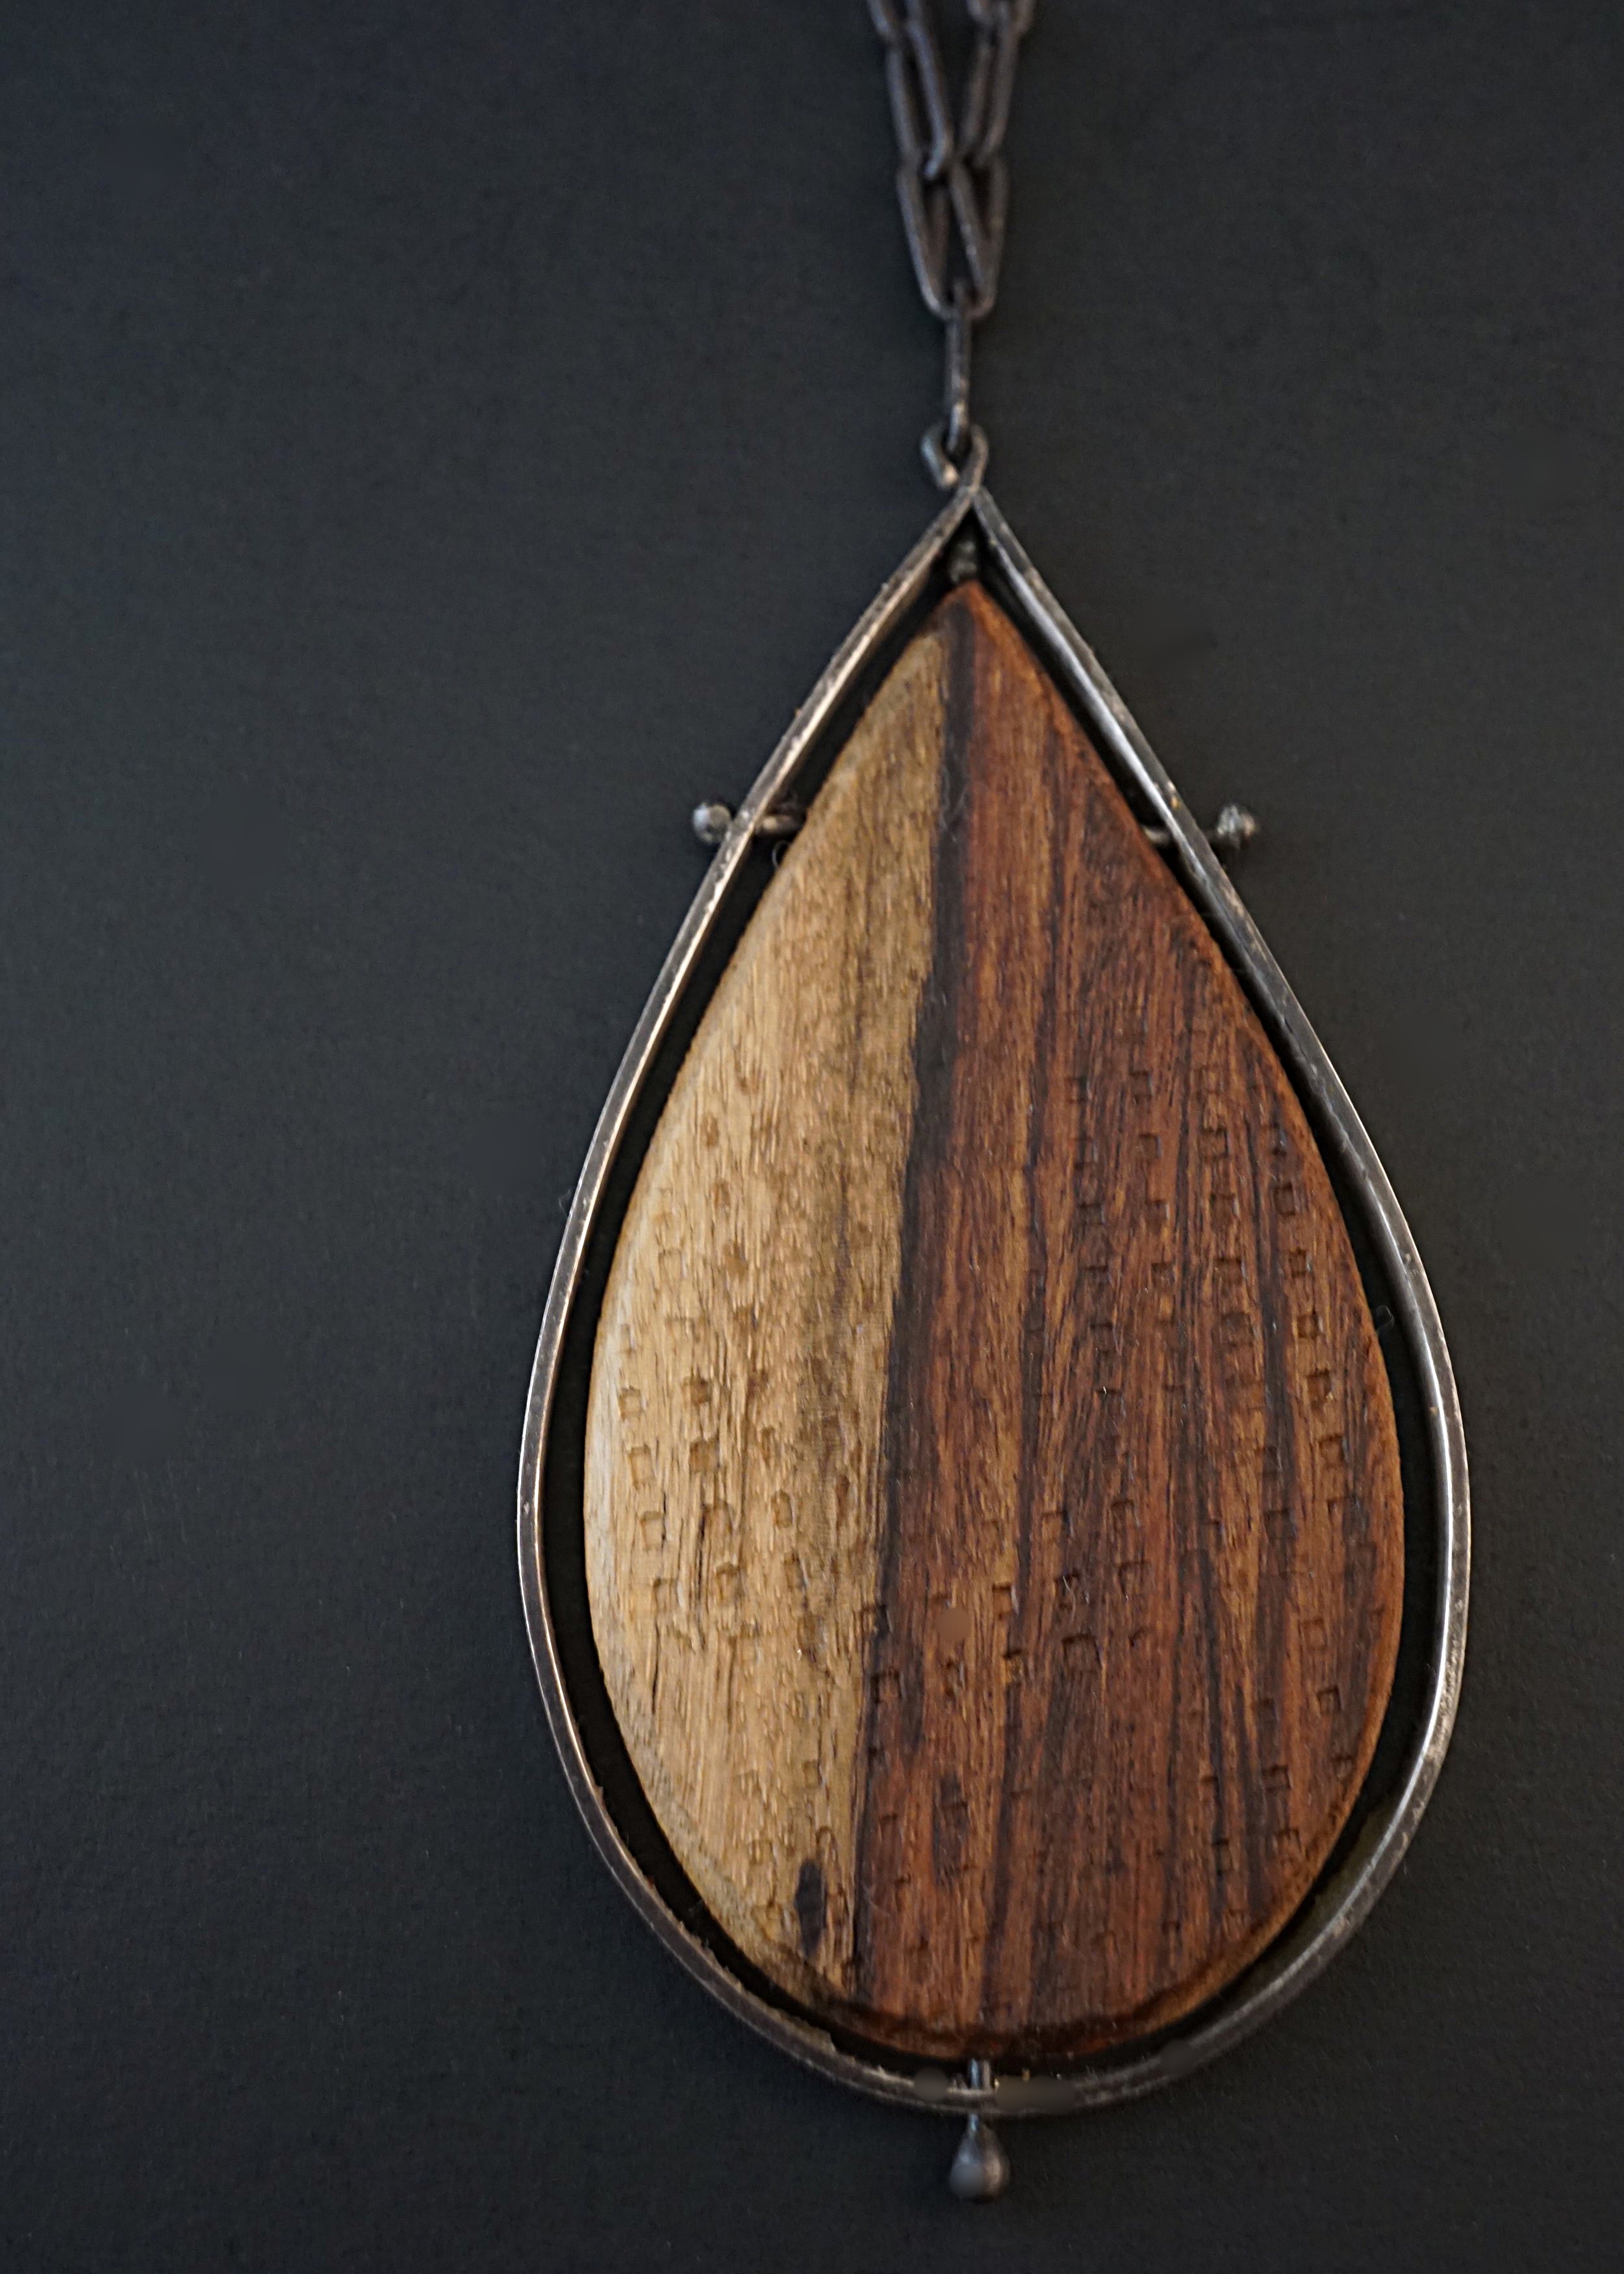 Bolivian rosewood pear shaped pendant